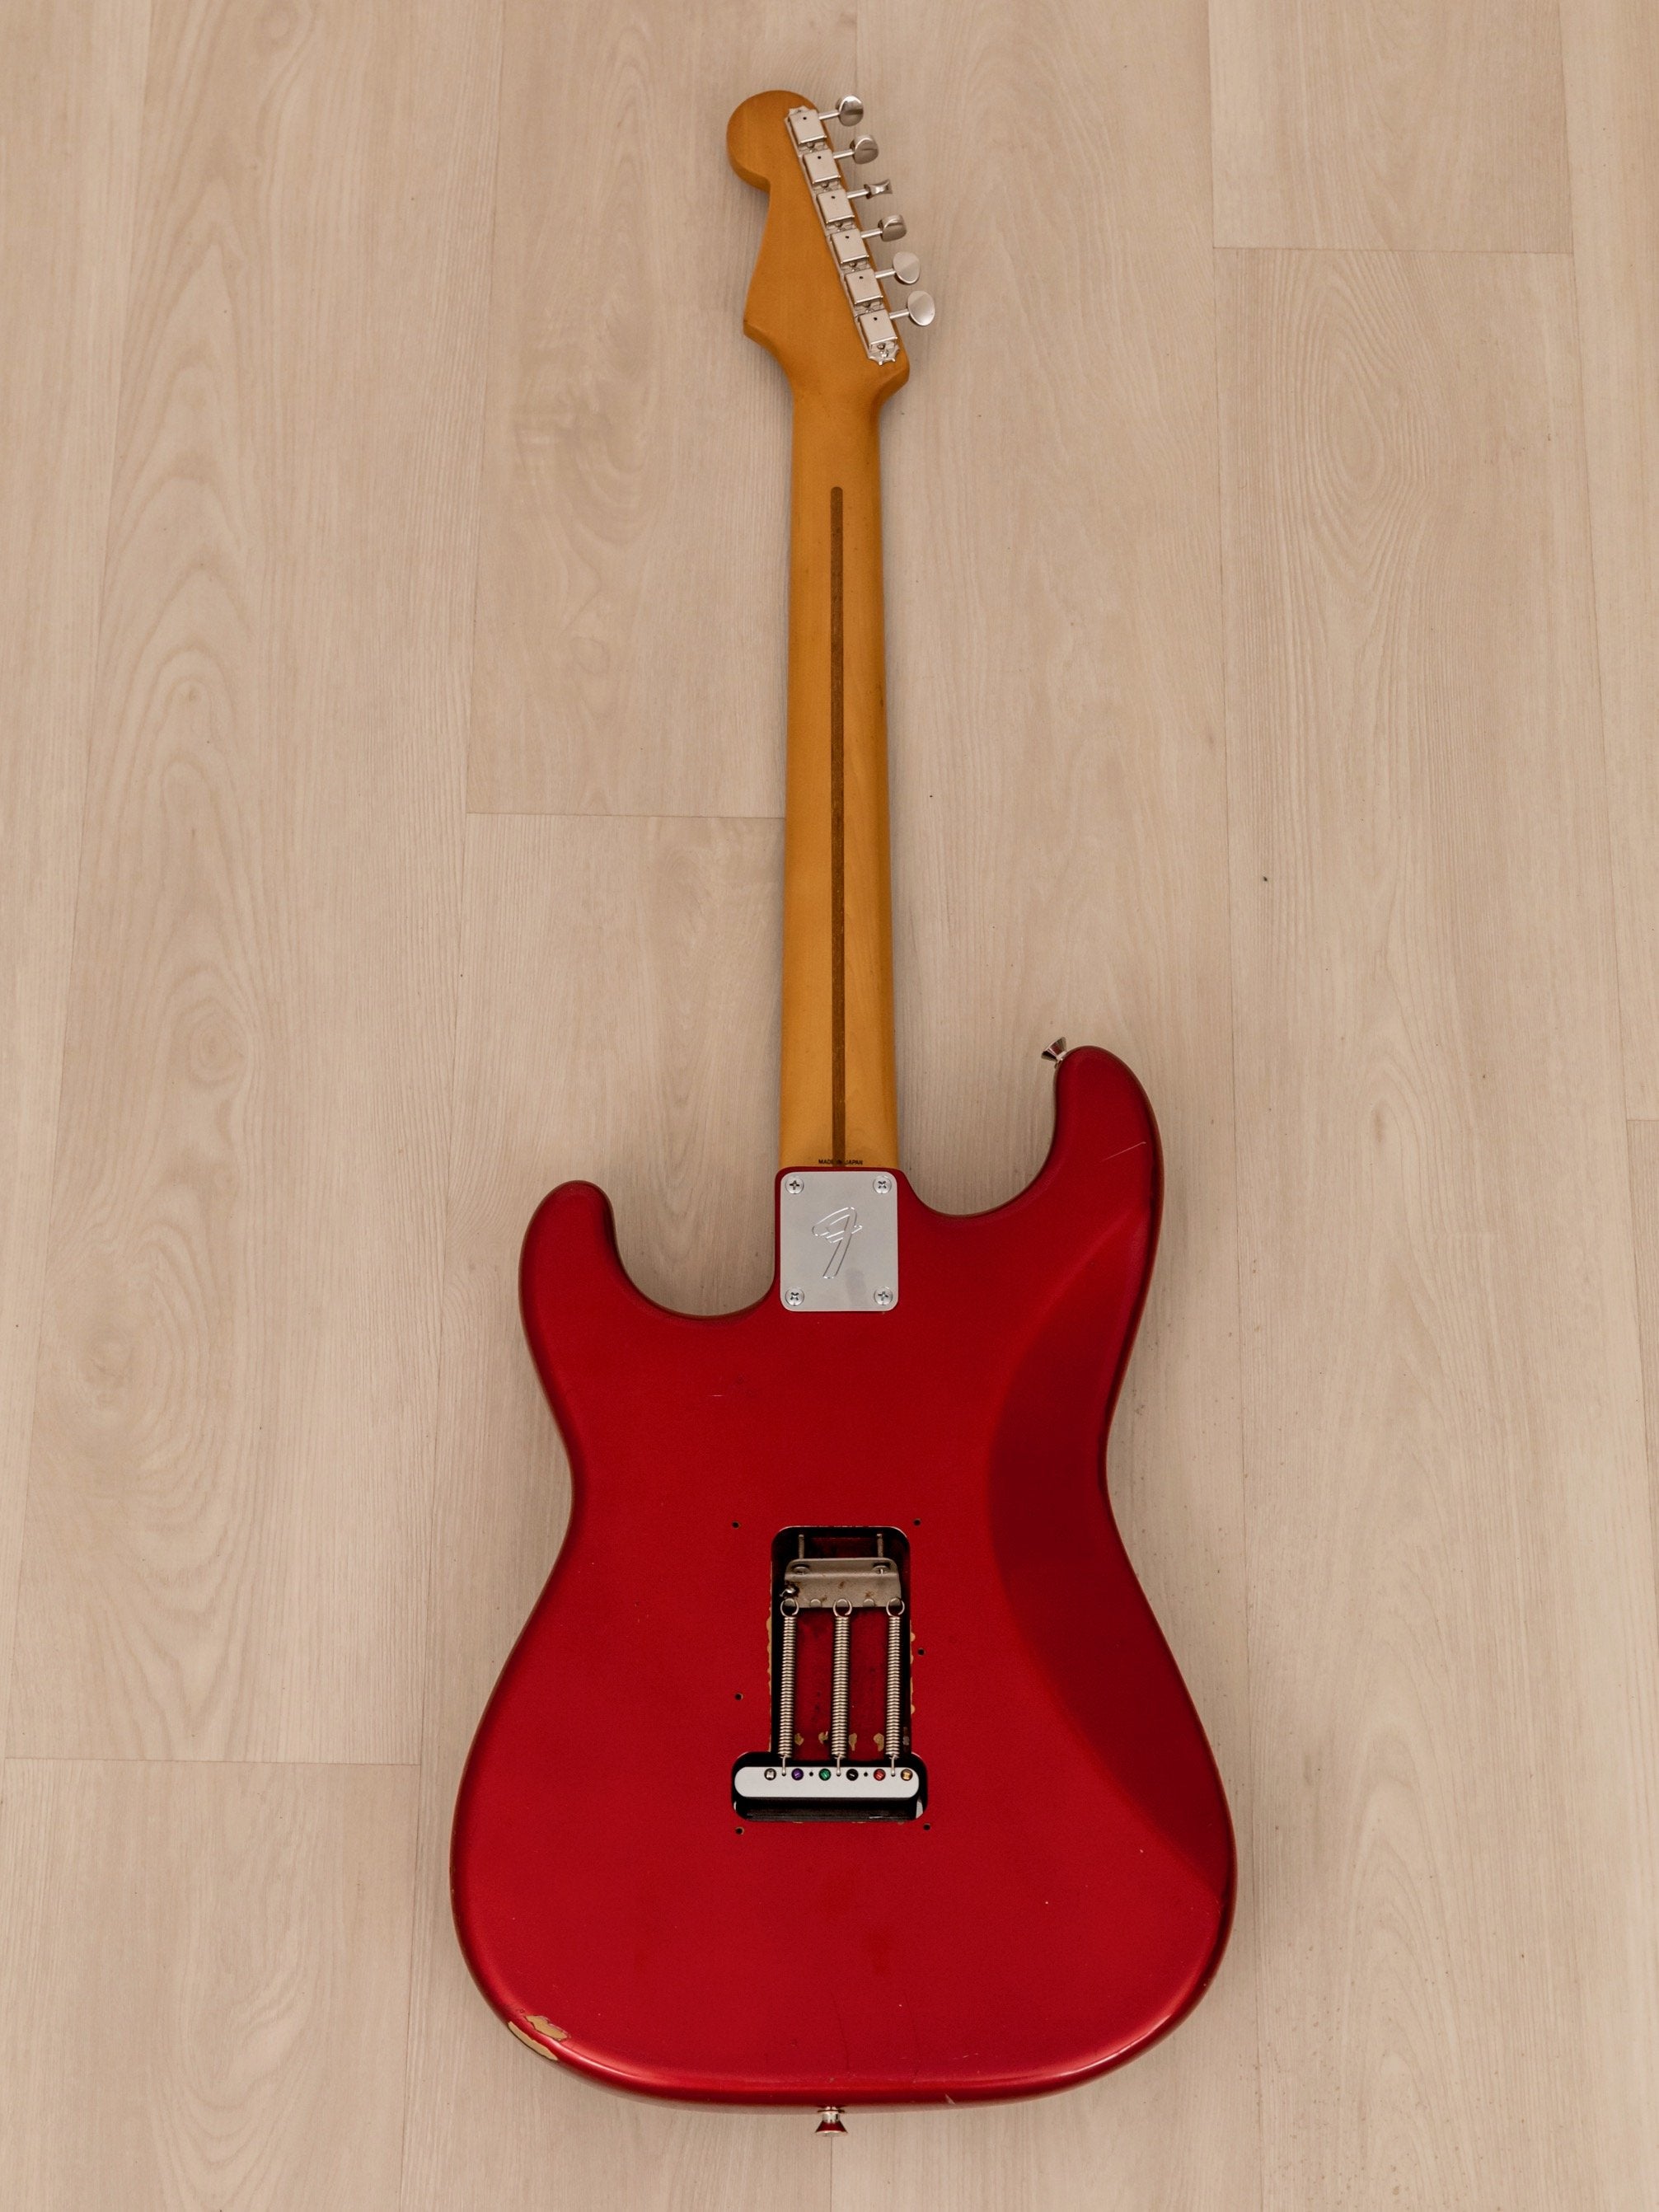 1990 Fender Order Made Stratocaster Scalloped Fretboard, Candy Apple Red w/ Seymour Duncan Hot Rails, Japan MIJ Fujigen